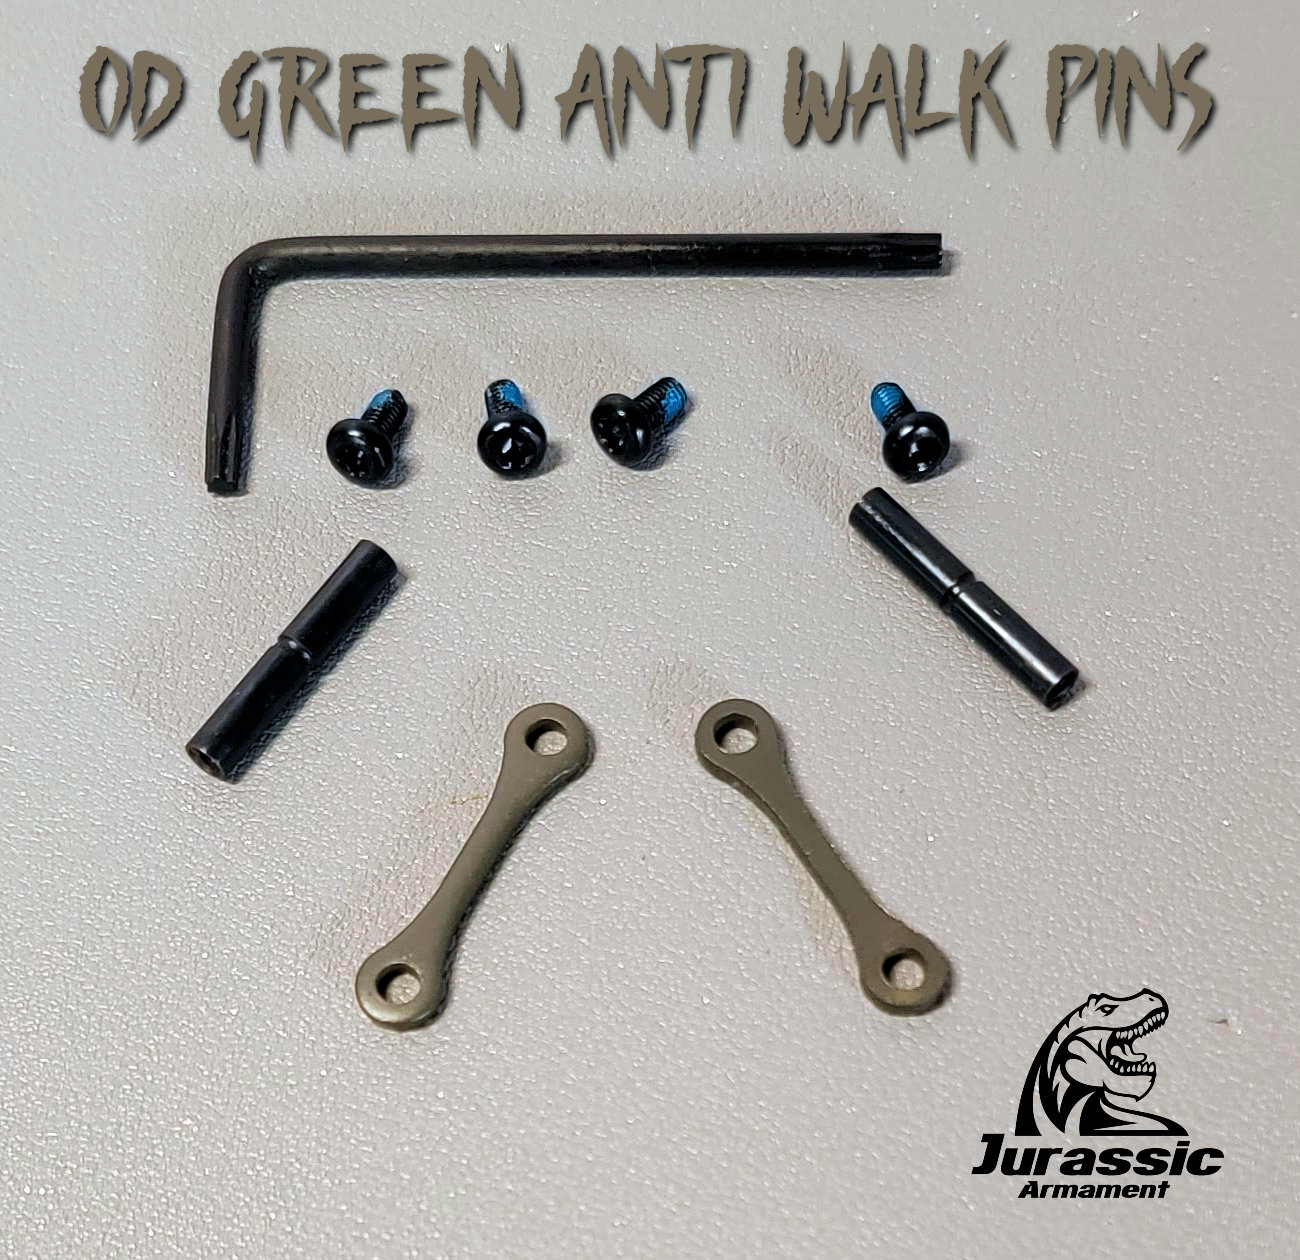 Magpul OD Green Anti Walk Pin set for AR15 ANTI-ROTATIONAL Trigger